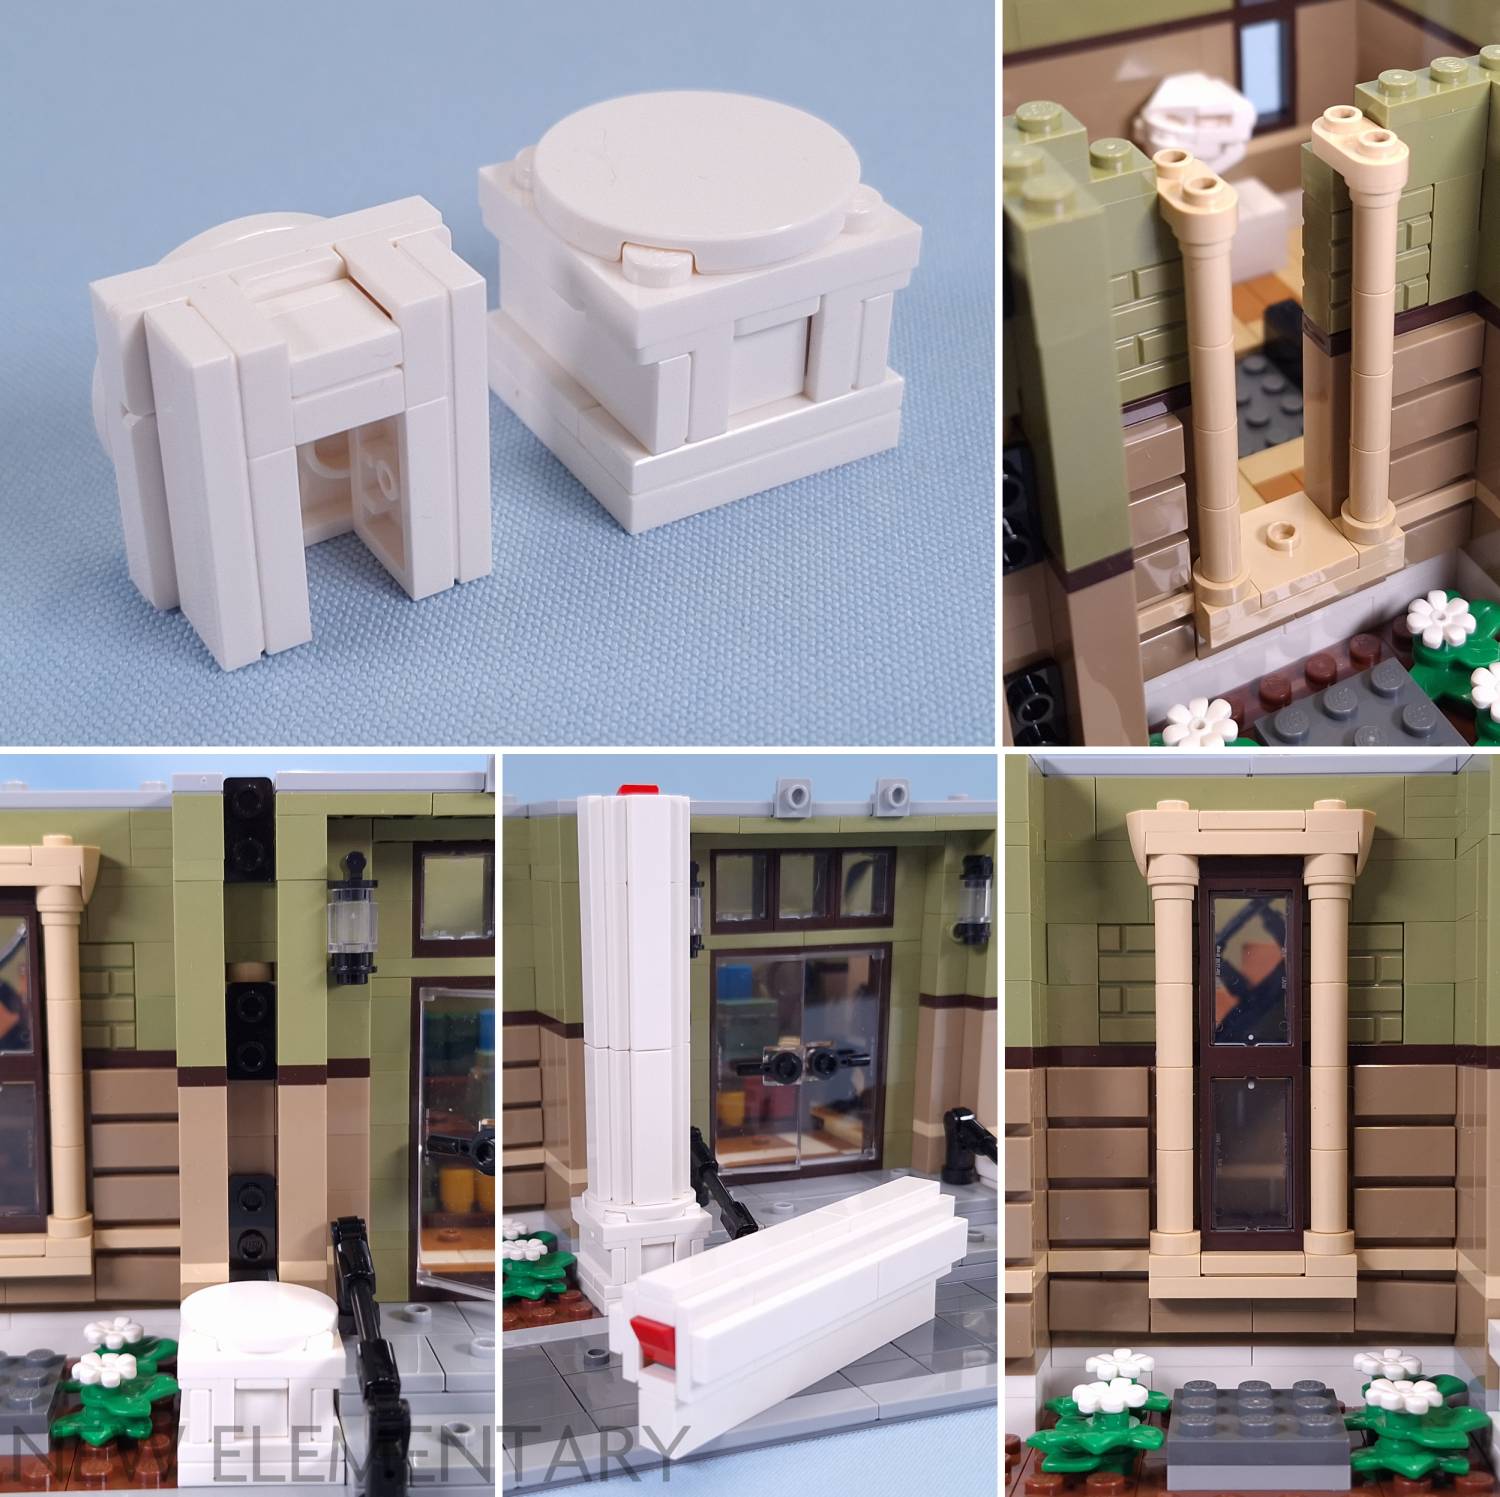 My BEST EVER Lego D-Day WW2 Build 